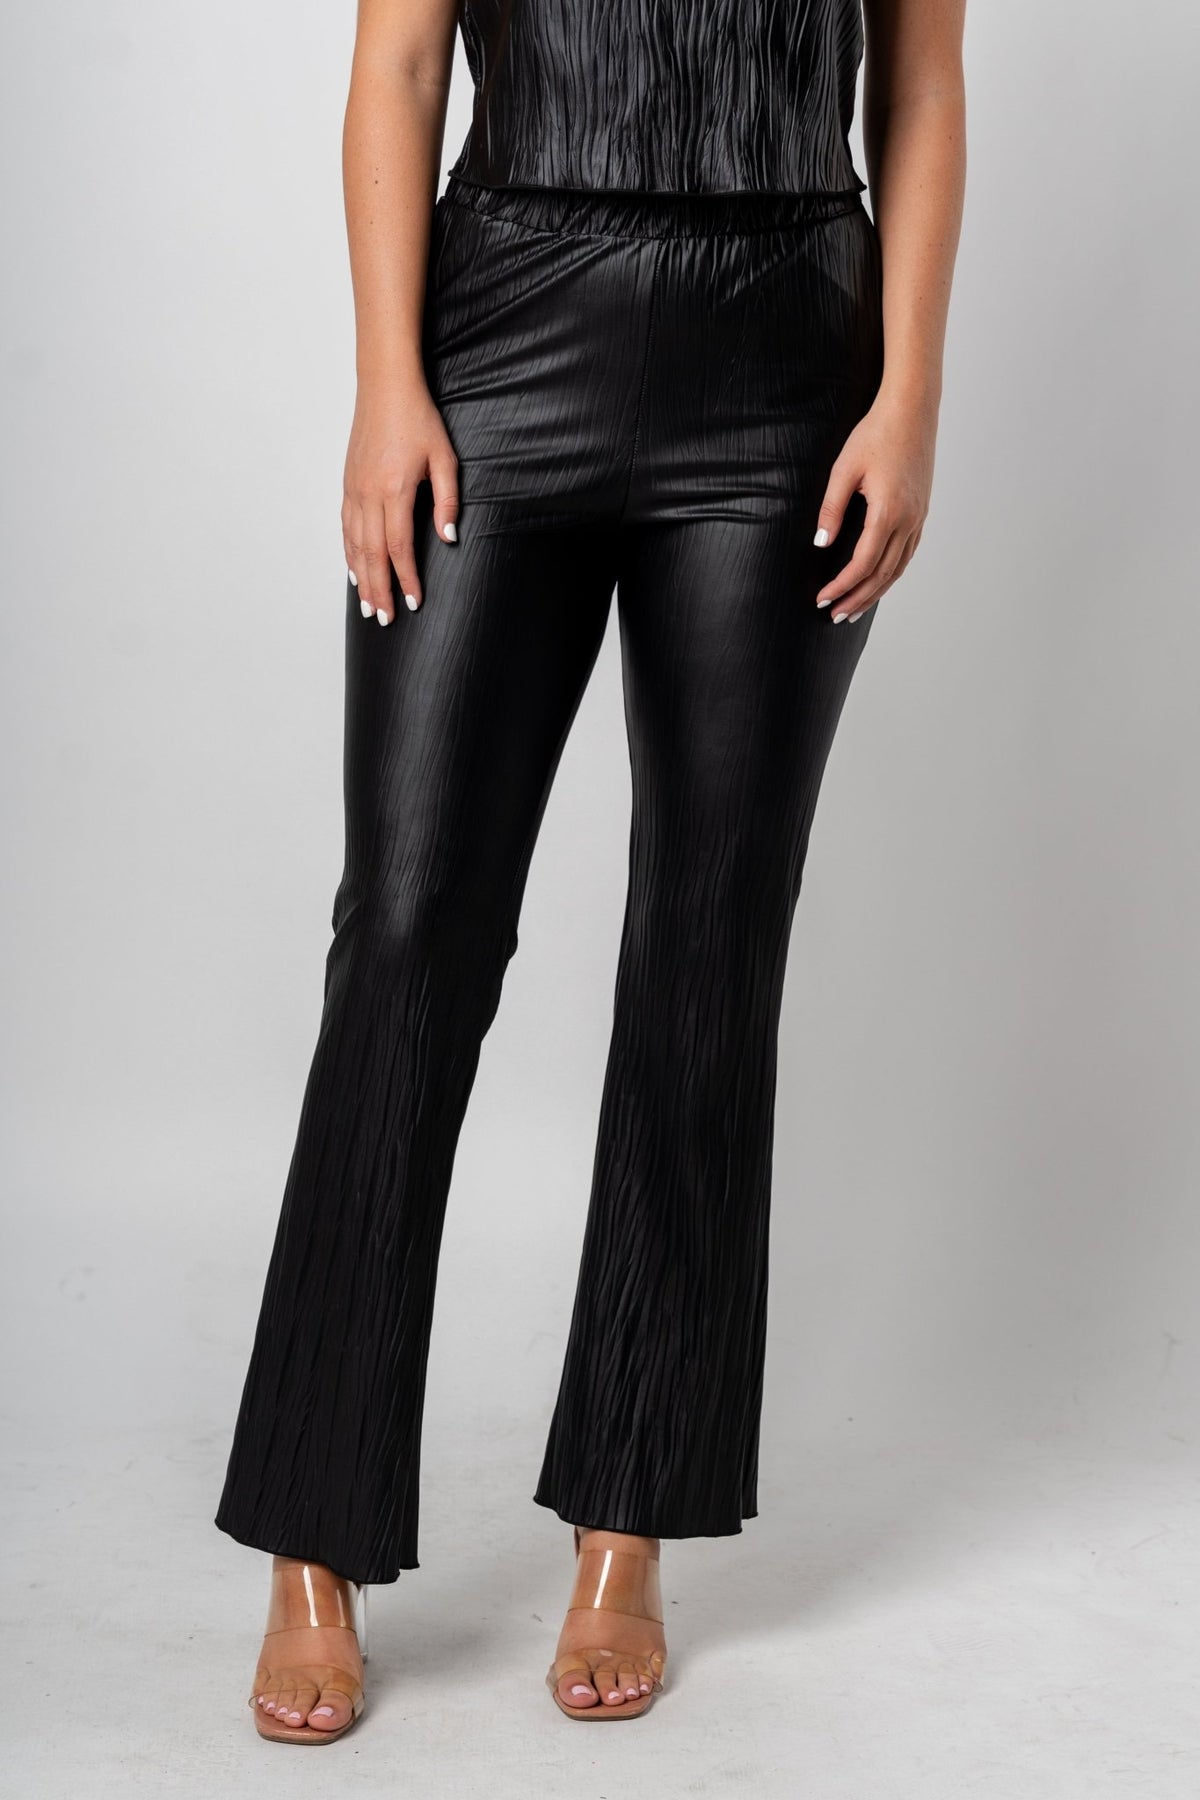 Pleated flare pants black | Lush Fashion Lounge: women's boutique pants, boutique women's pants, affordable boutique pants, women's fashion pants